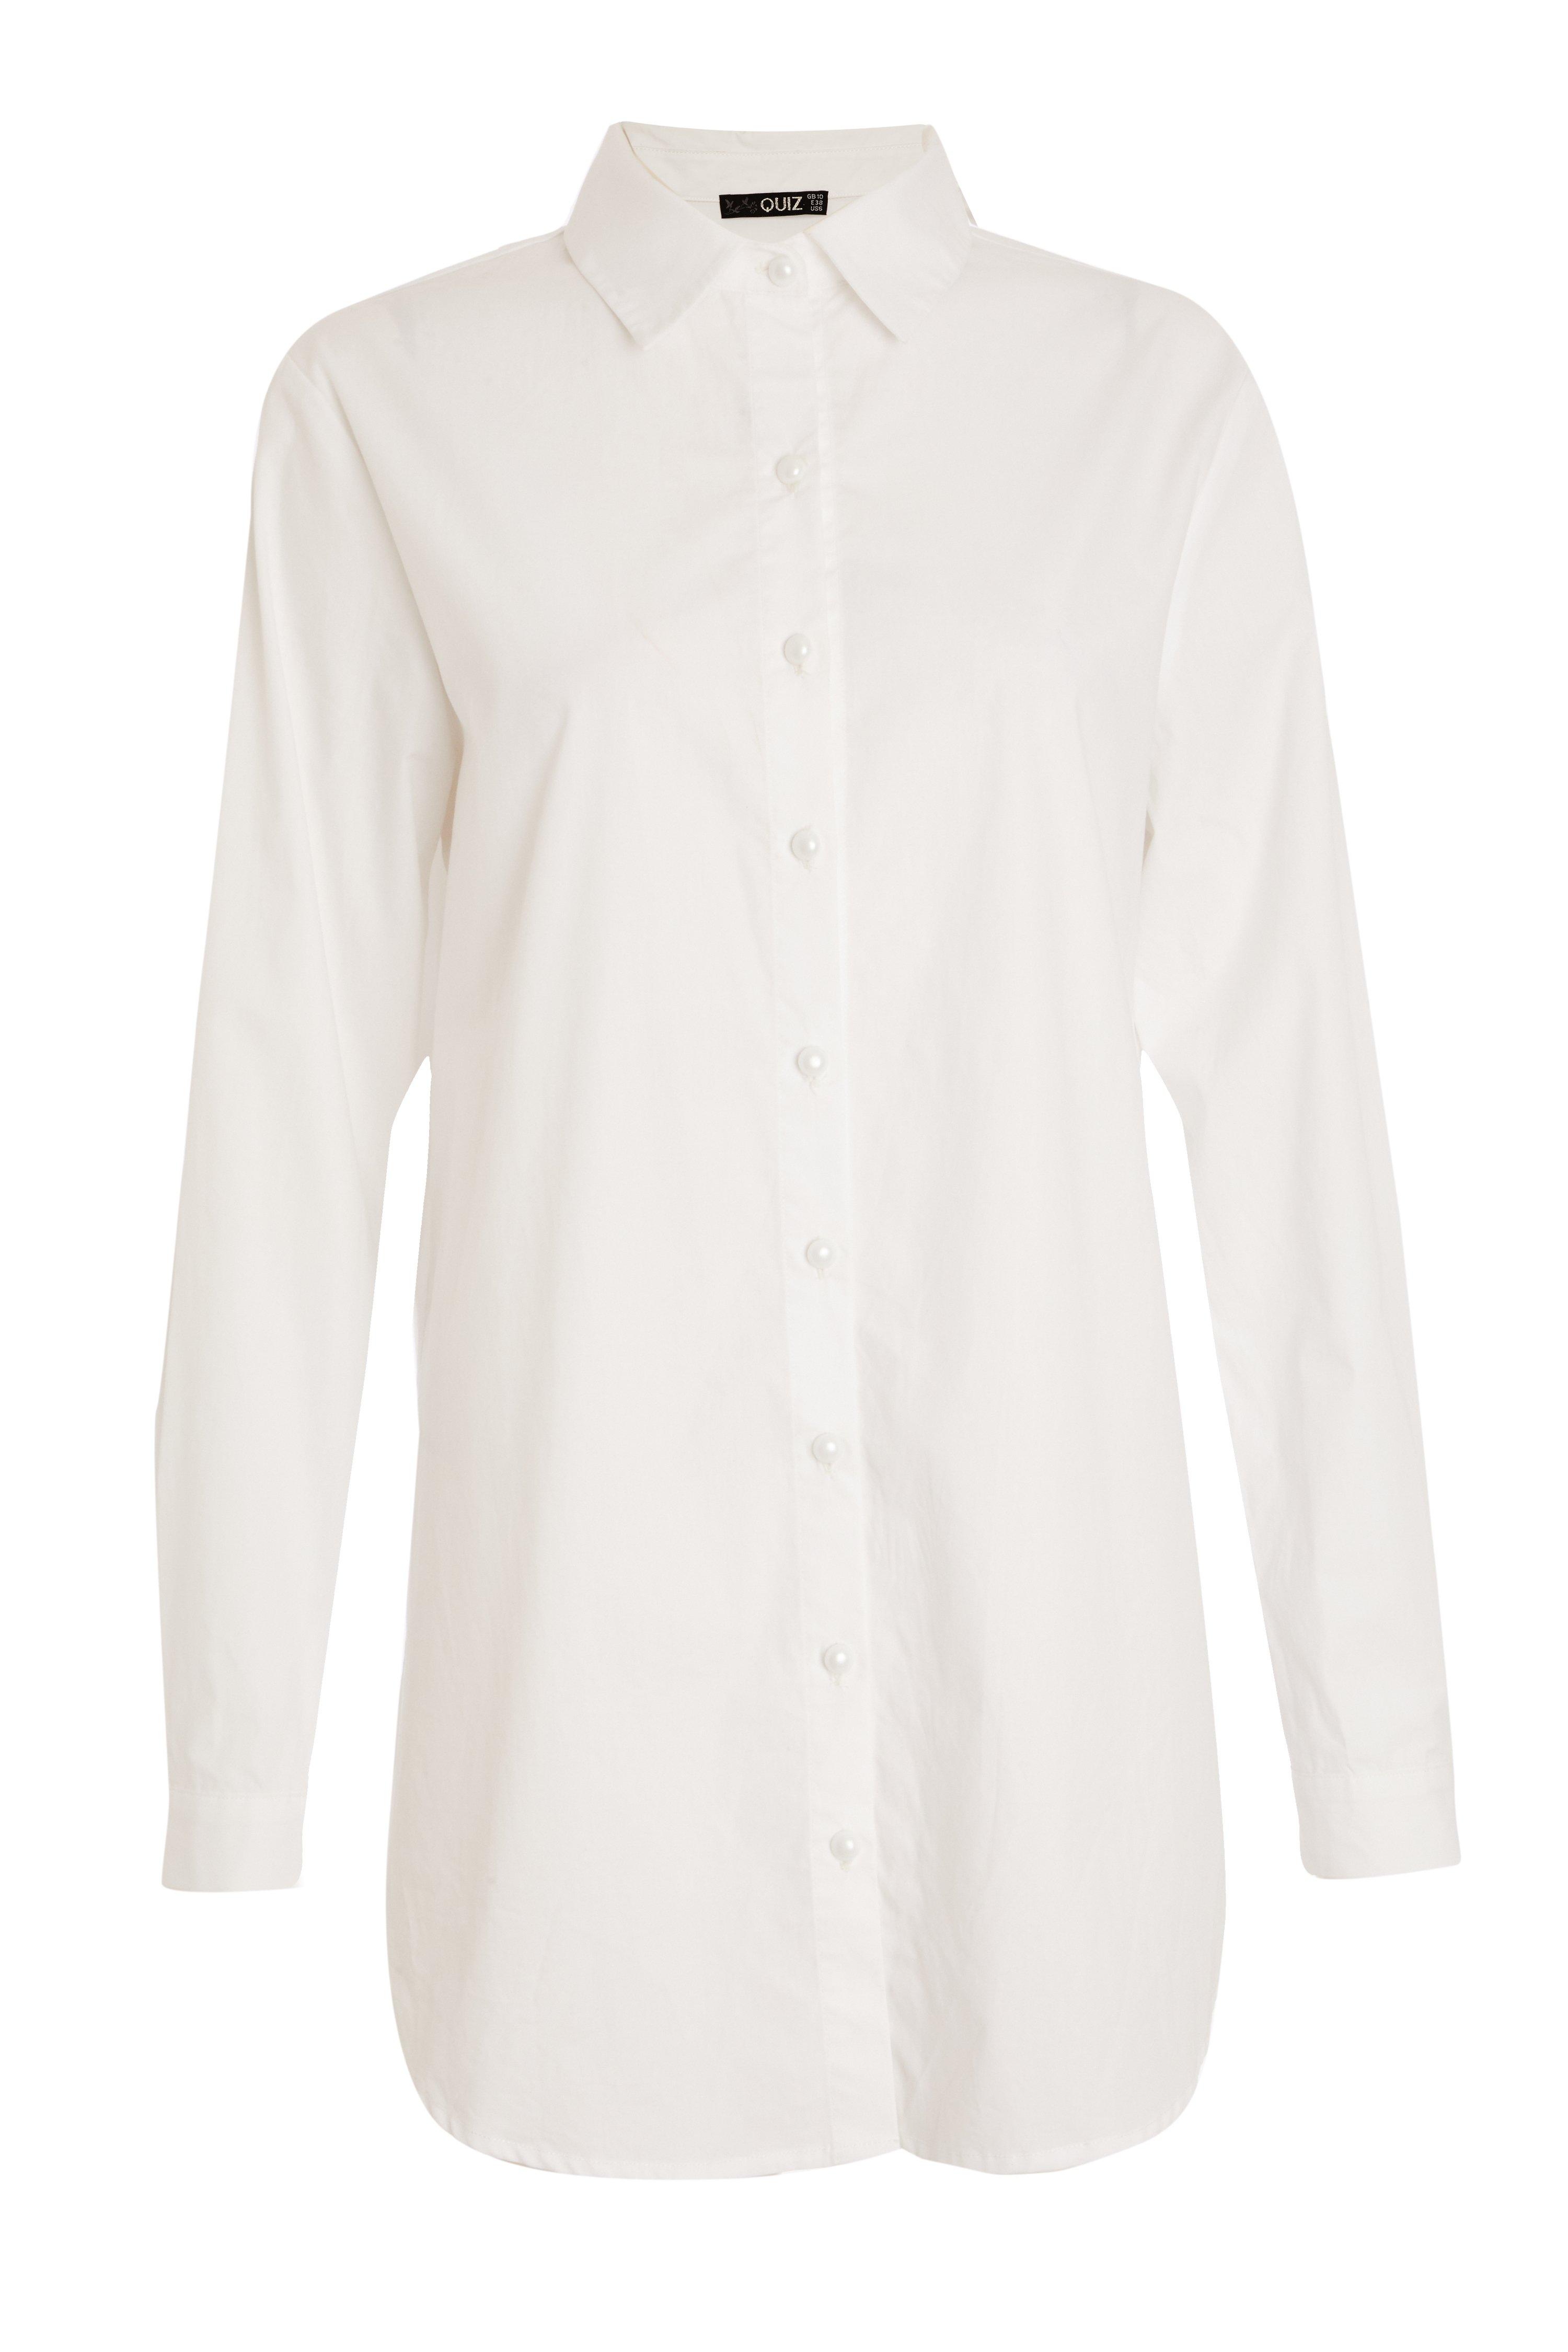 White Long Line Shirt - Quiz Clothing